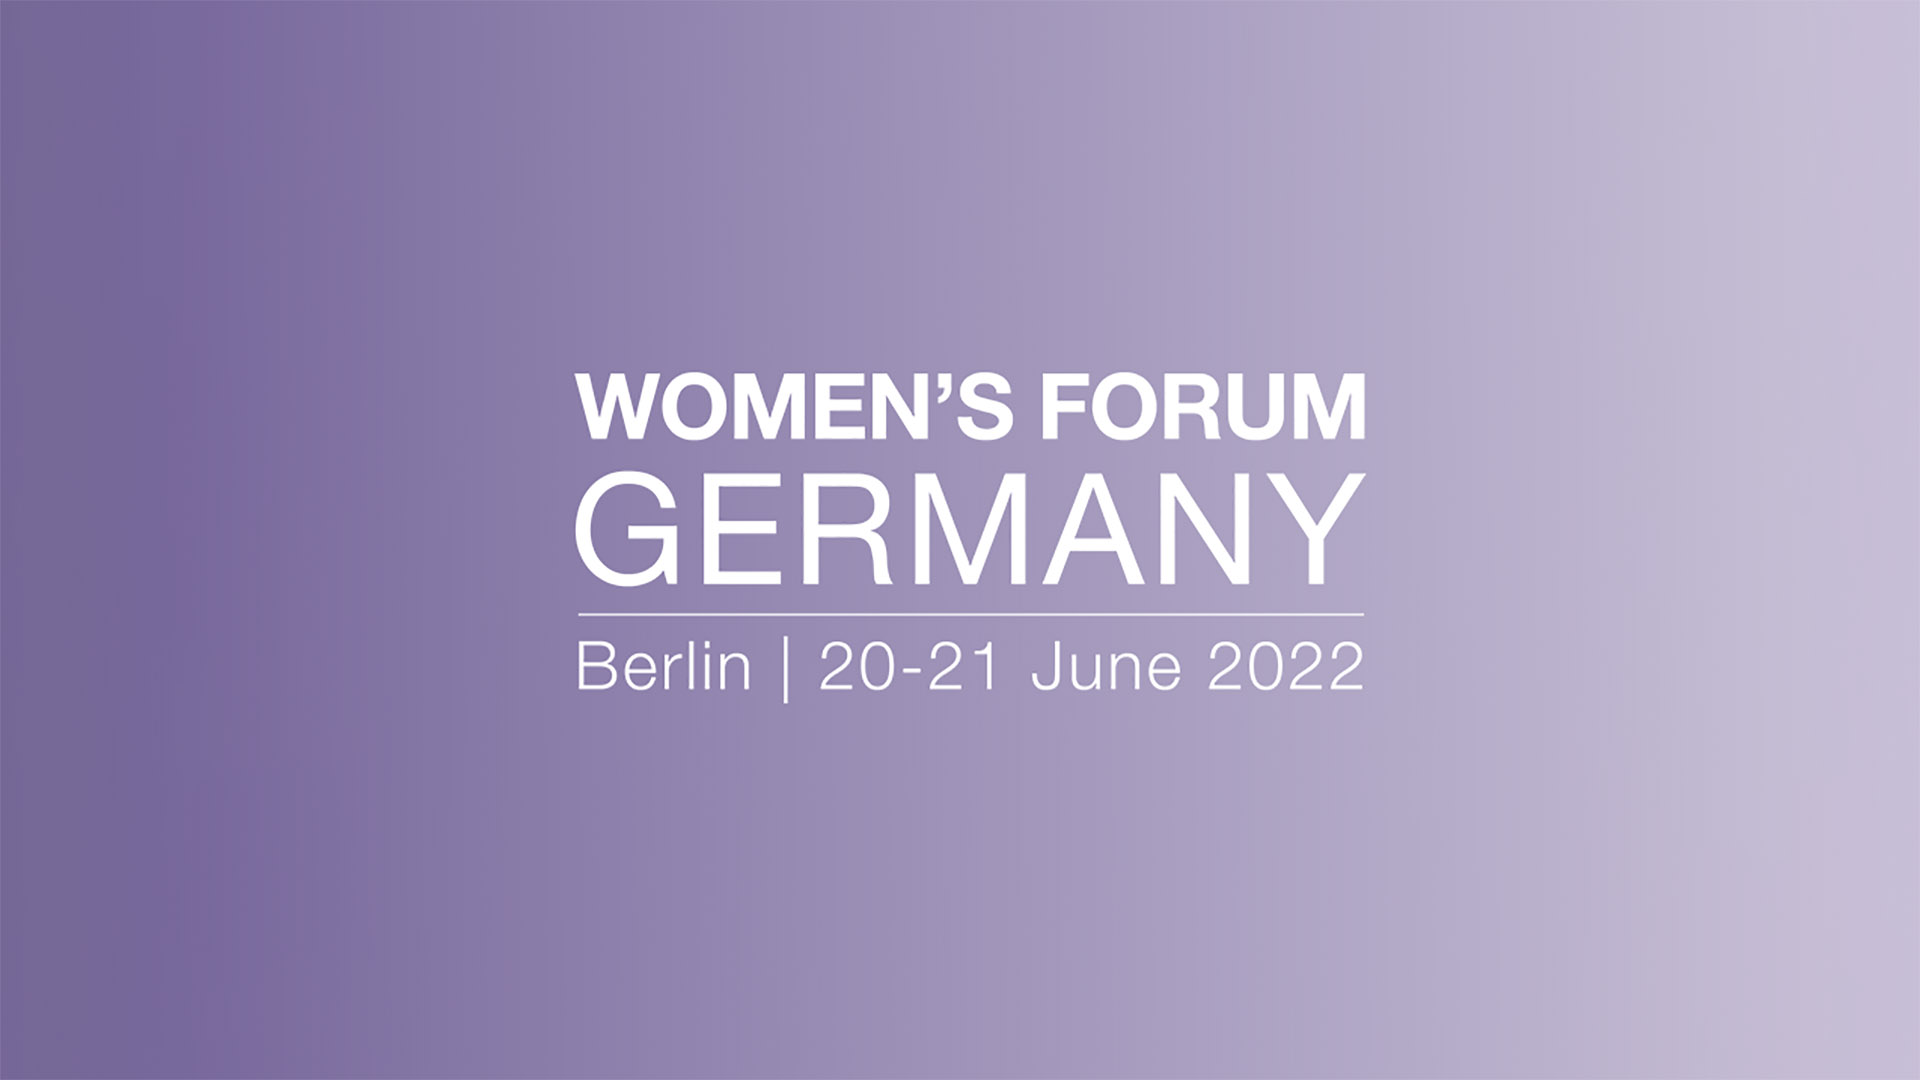 Women's Forum for the Economy & Society